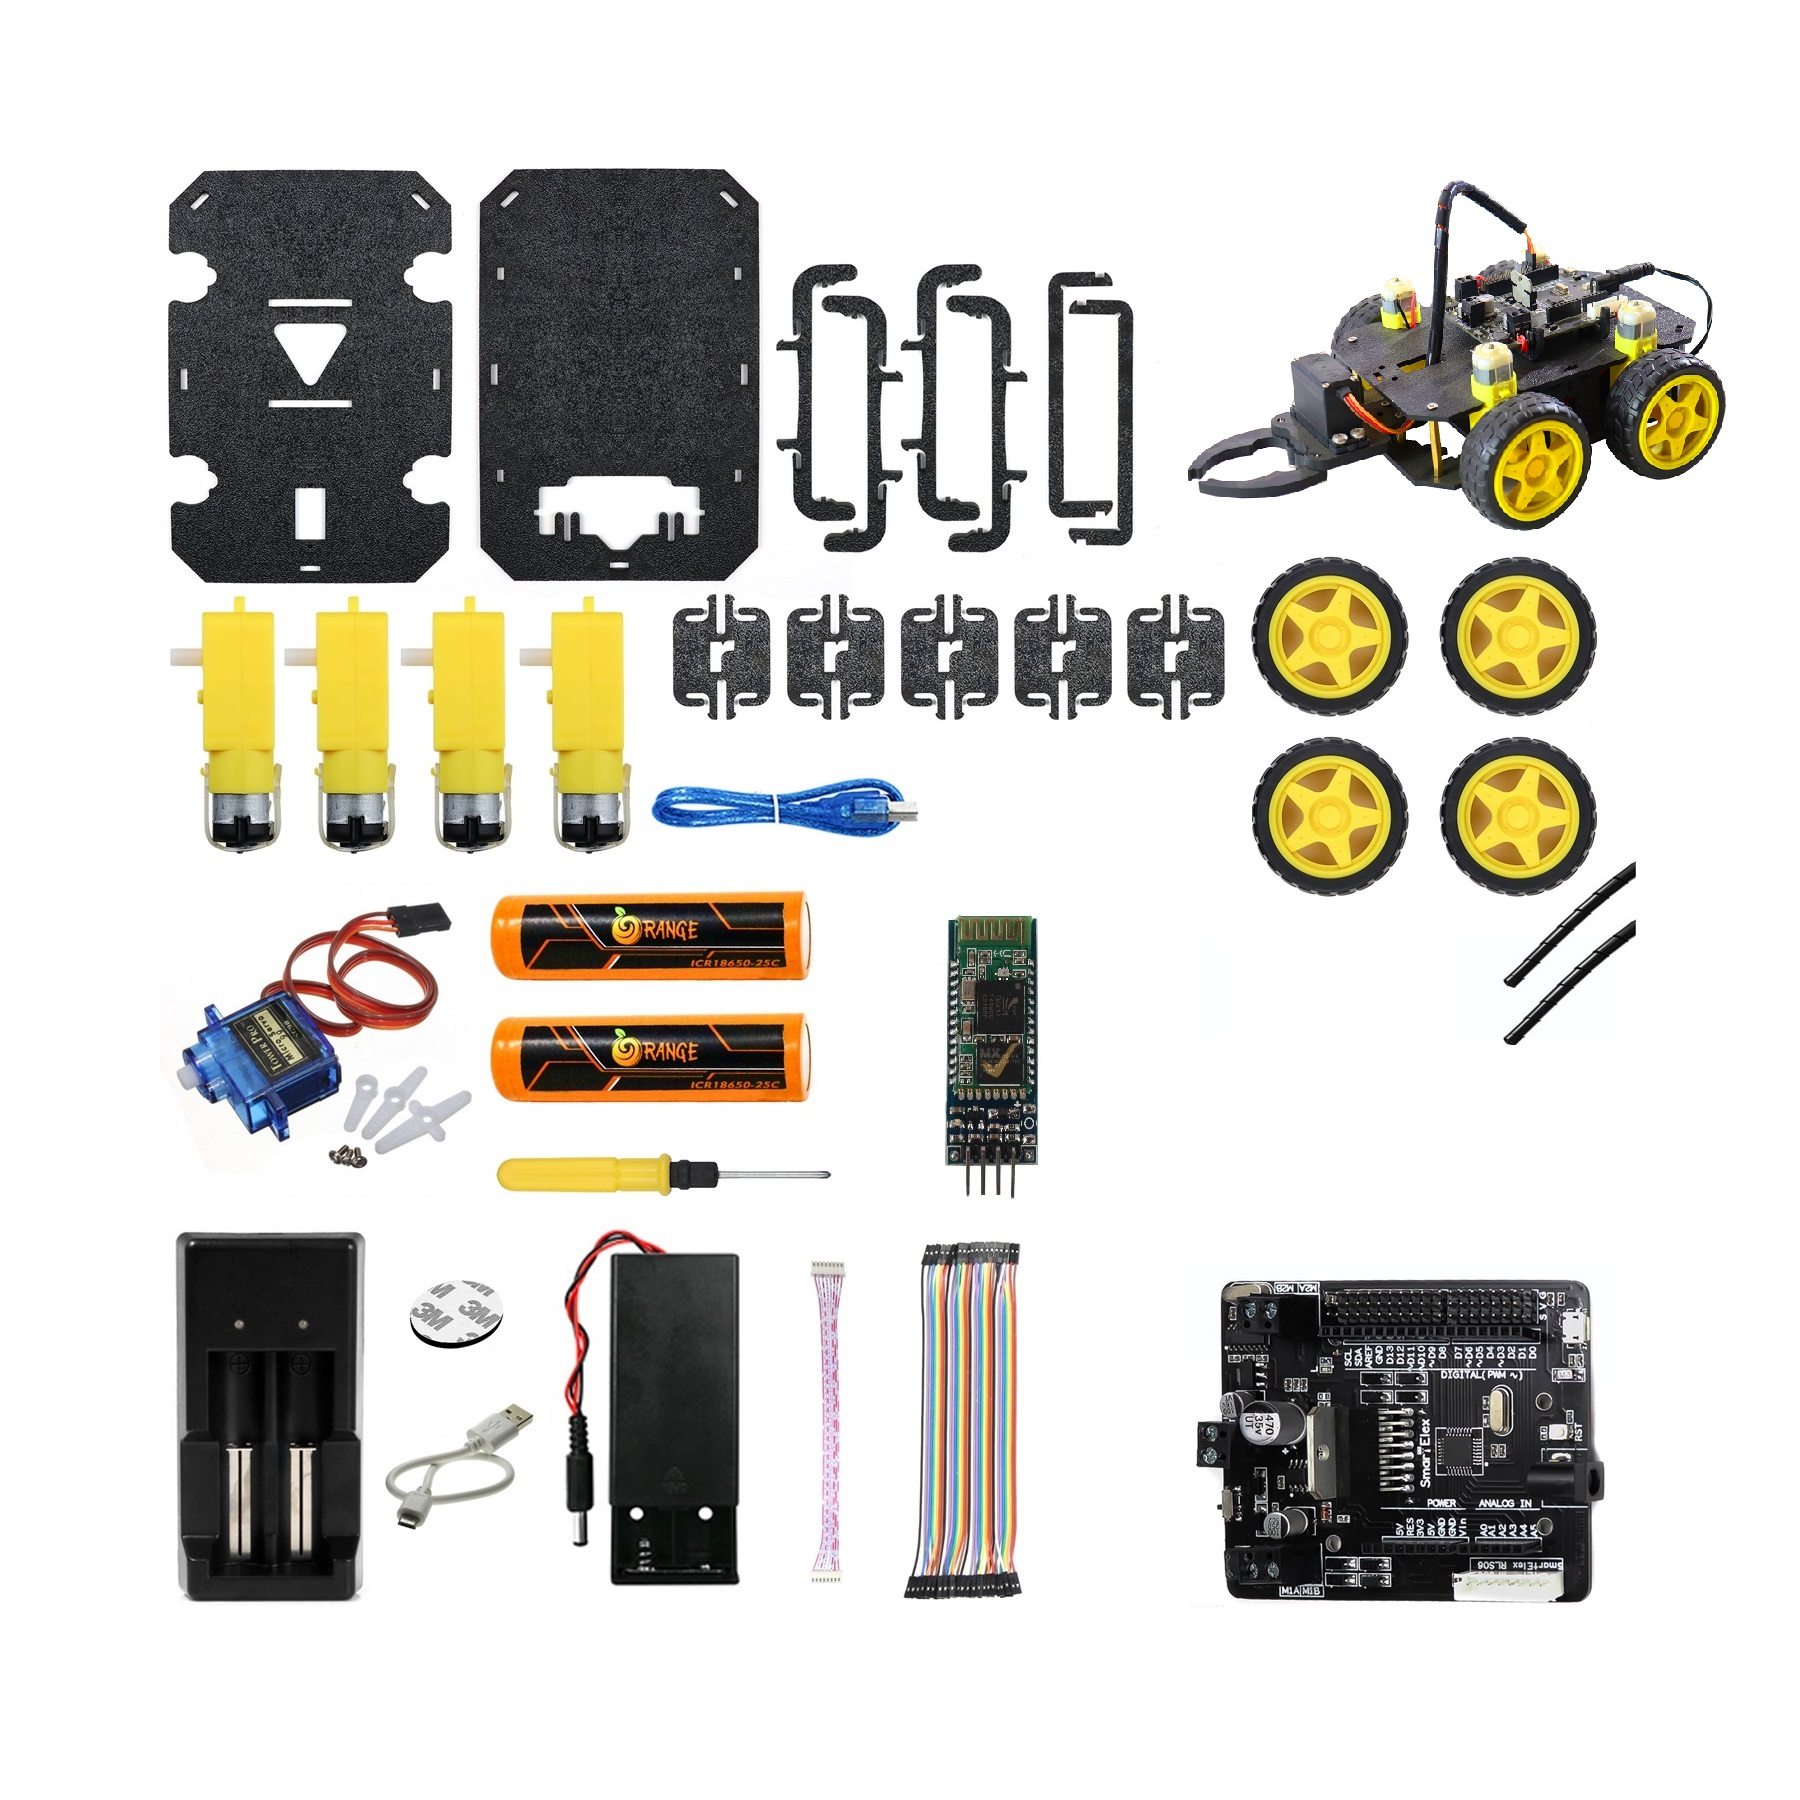 Buy Cligo 4WD Smart Robot Car Kit Online at the Best Price